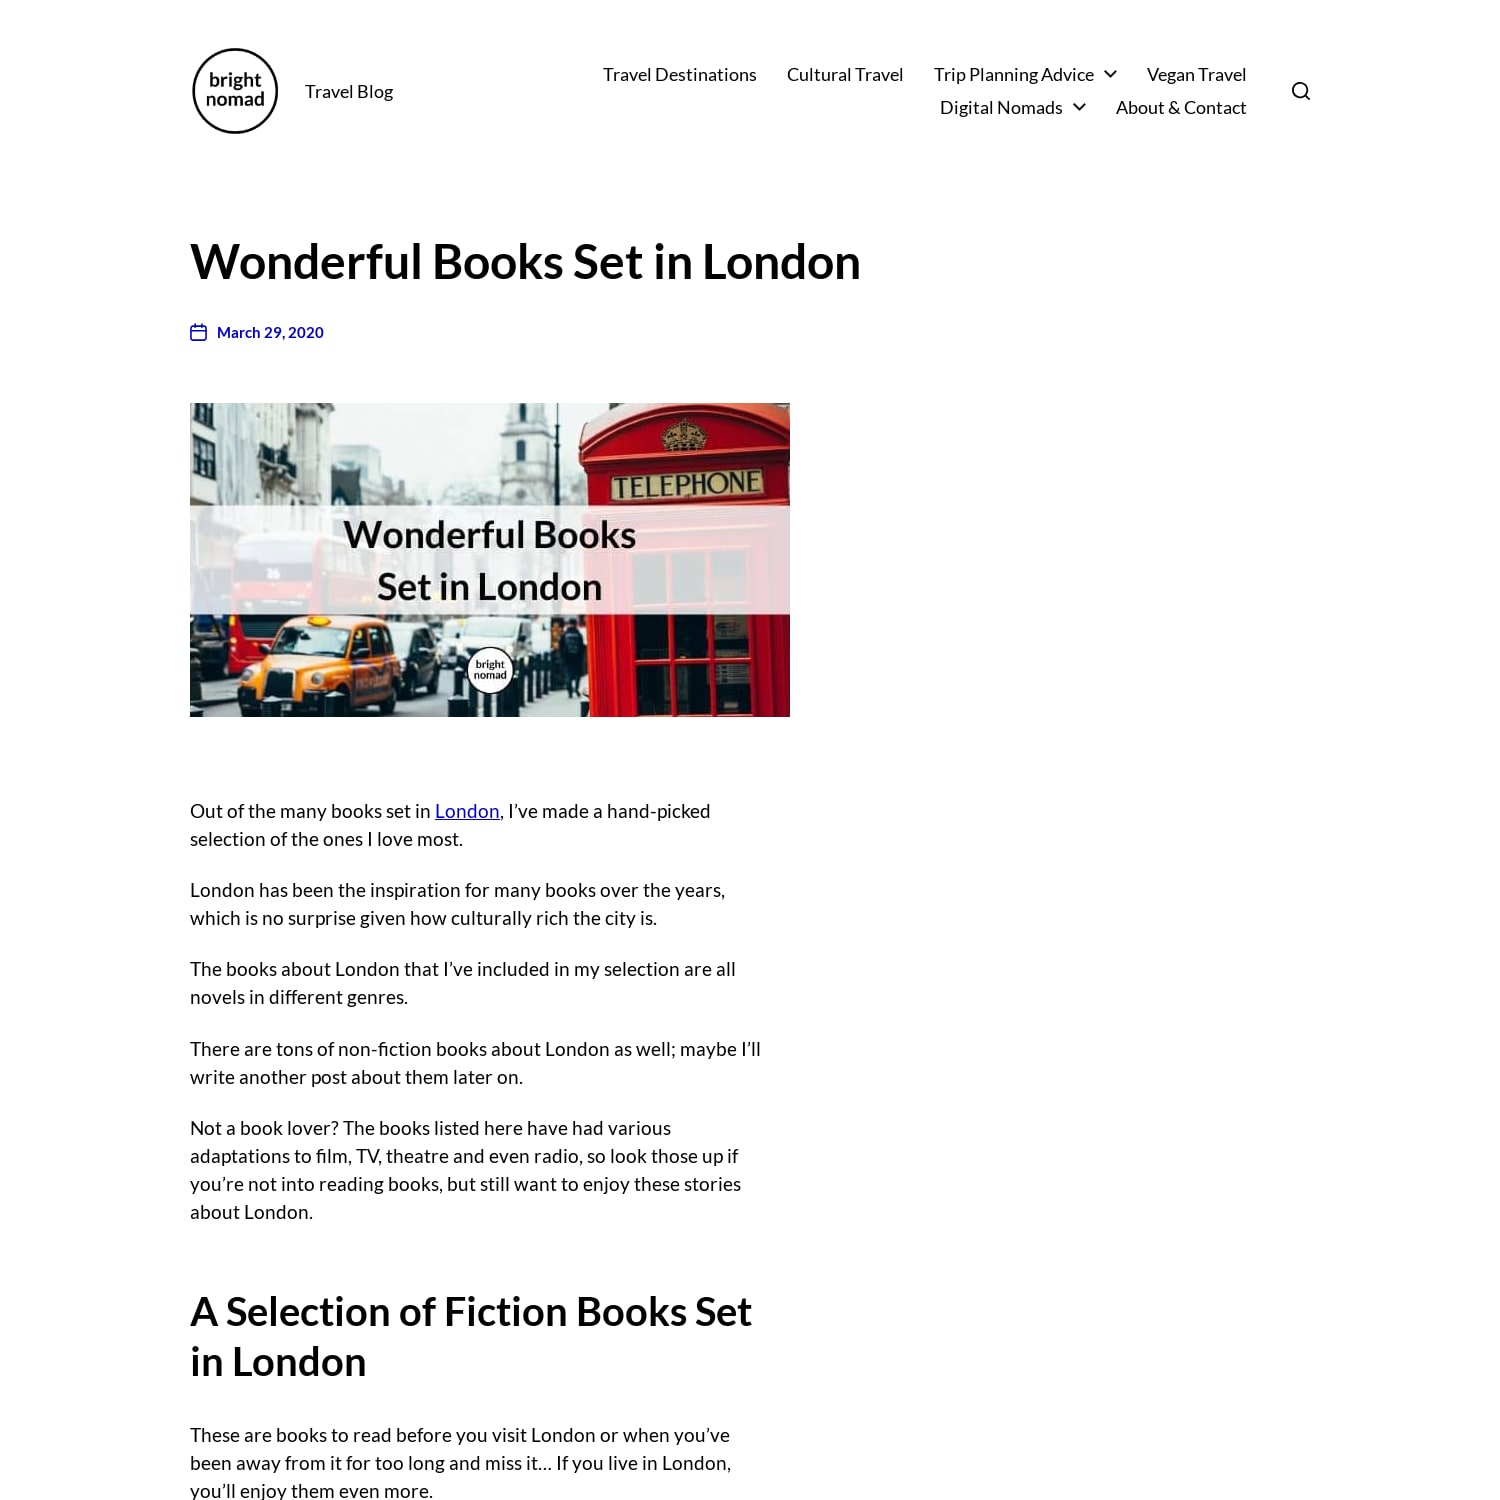 Wonderful Books Set in London - The Best London Novels